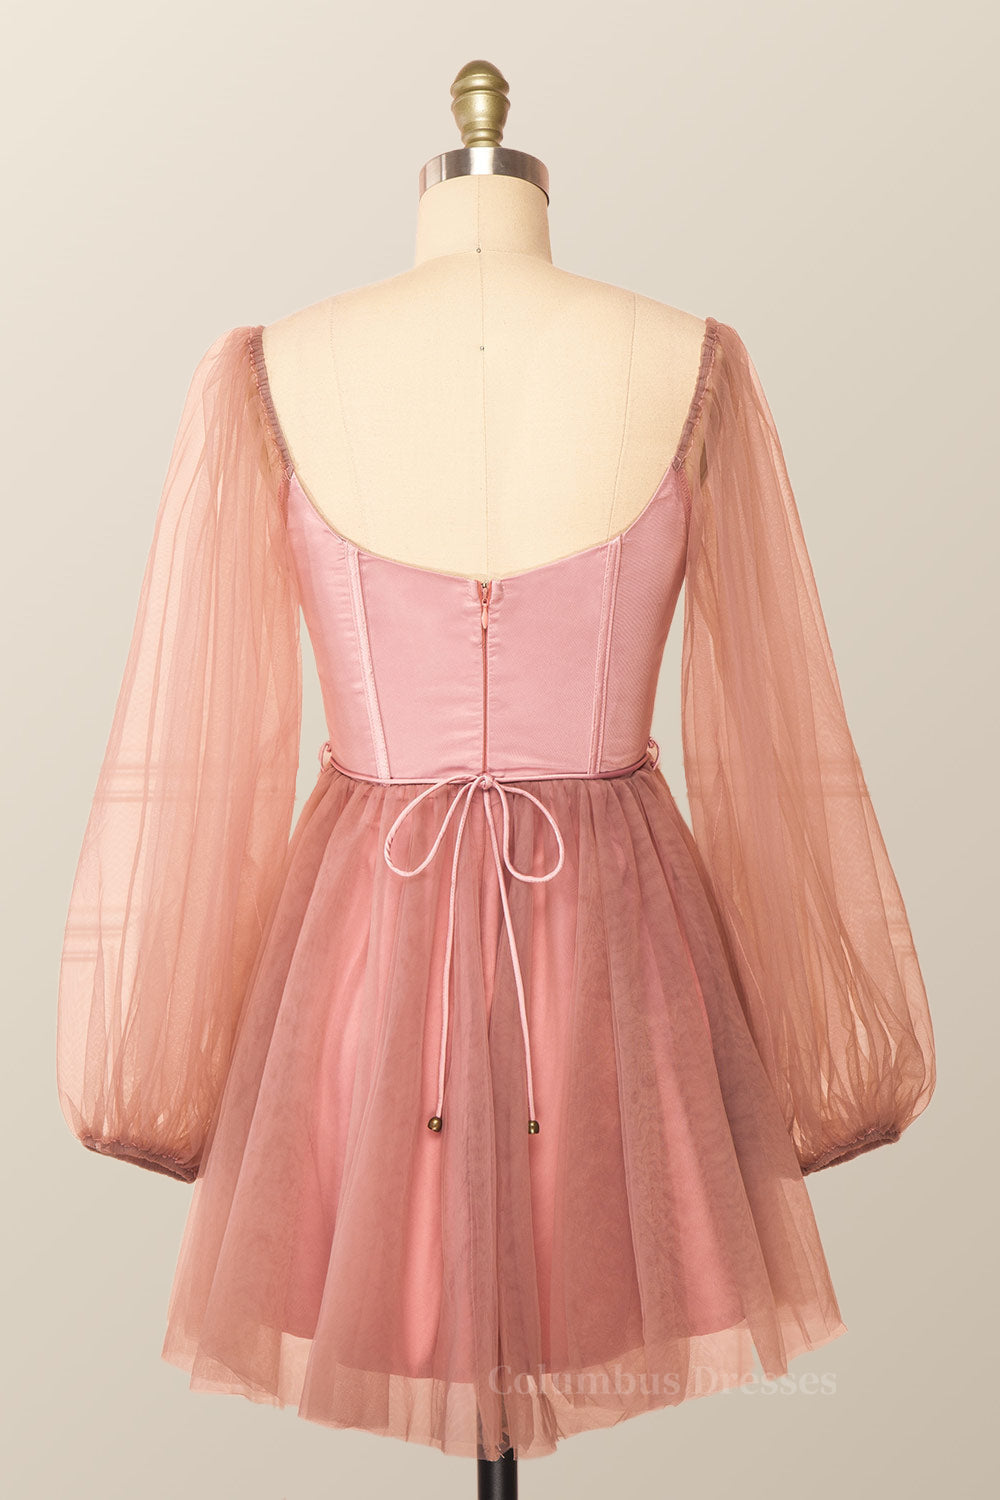 Sweater Dress, Puffy Long Sleeves Blush Pink Corset Short Dress